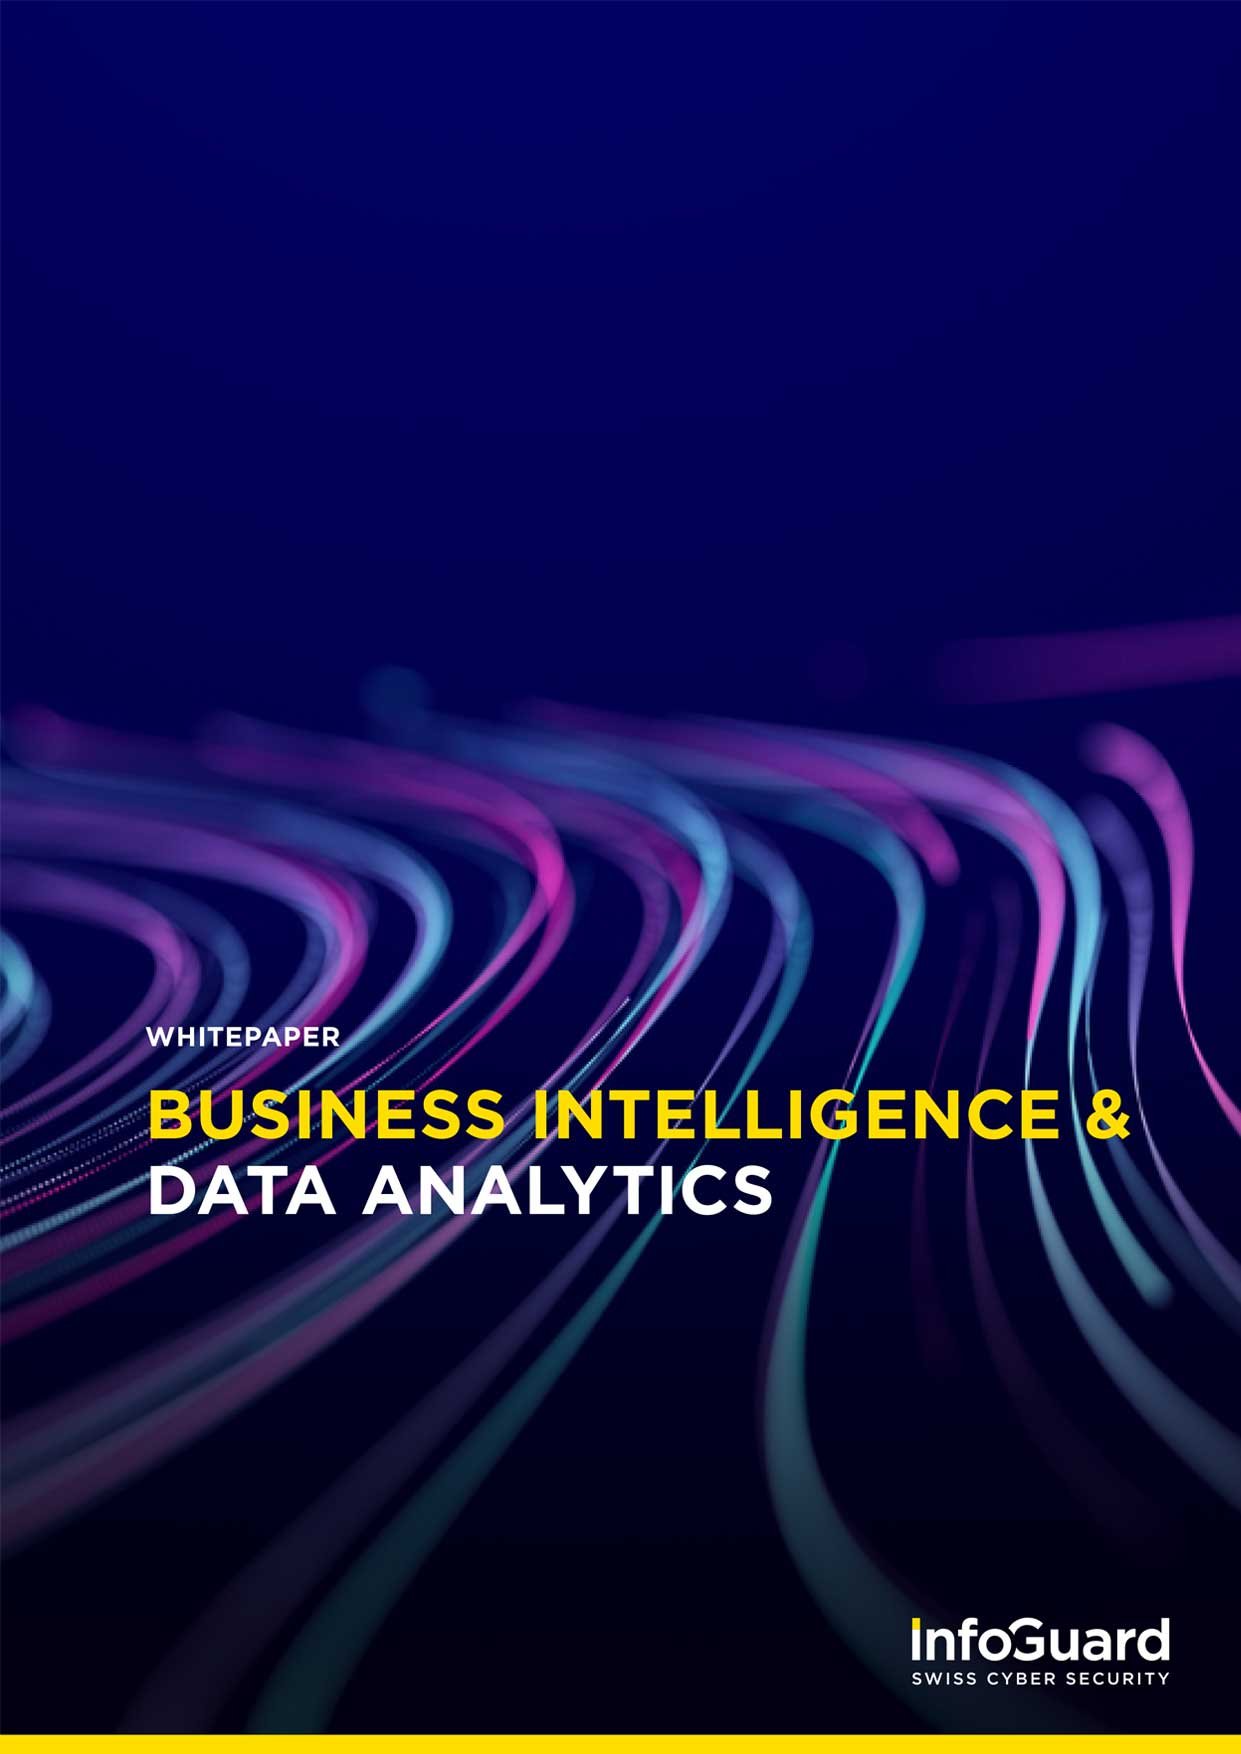 InfoGuard Whitepaper Business Intelligence & Data Analytics